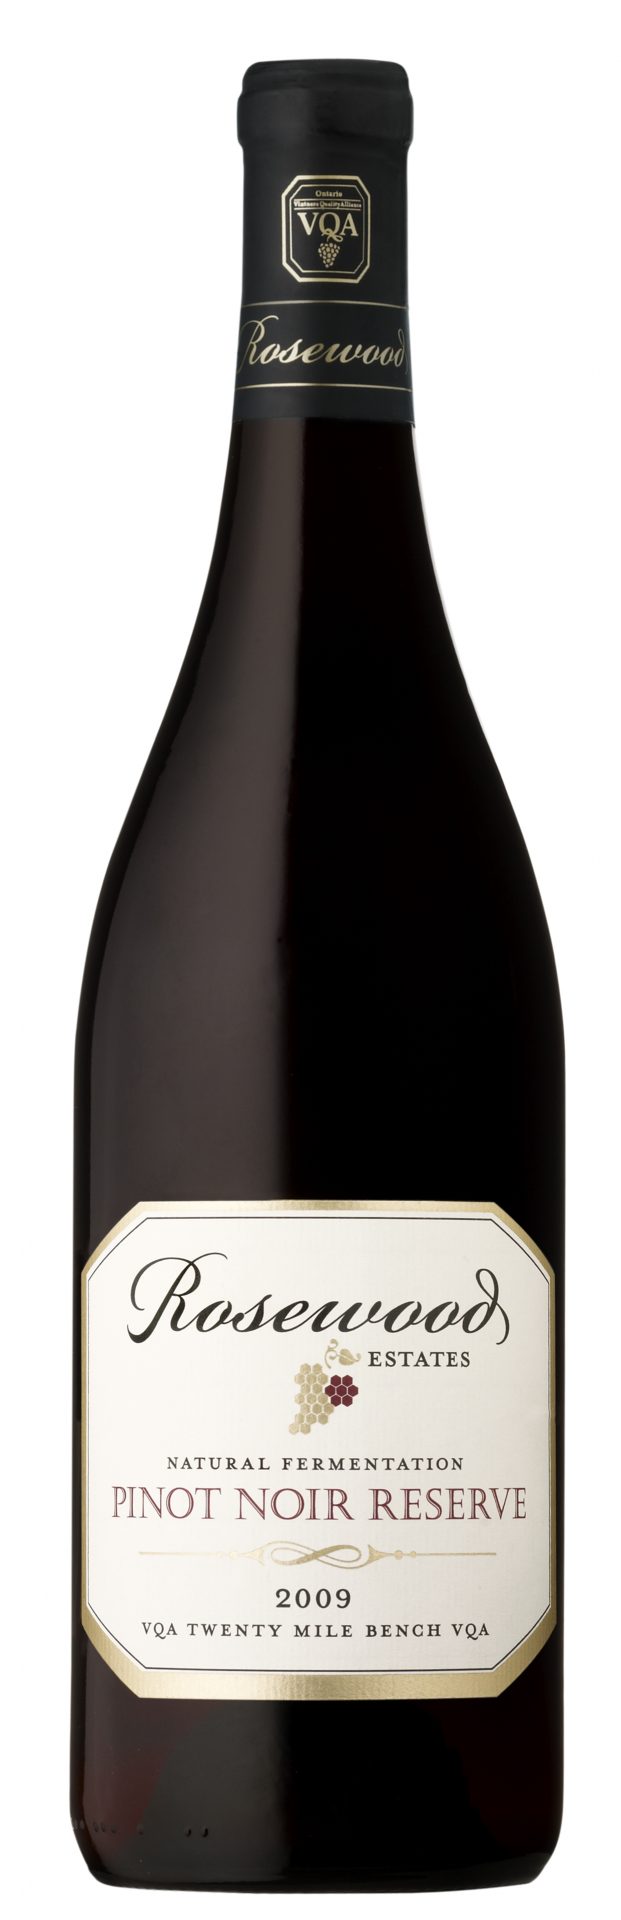 Вино на поминки. Redwood Pinot Noir. Duck point Pinot Noir вино. Вино Пино Нуар резерв спешел вина де ла Коста. Santa Carolina, "reserva" Pinot Noir.